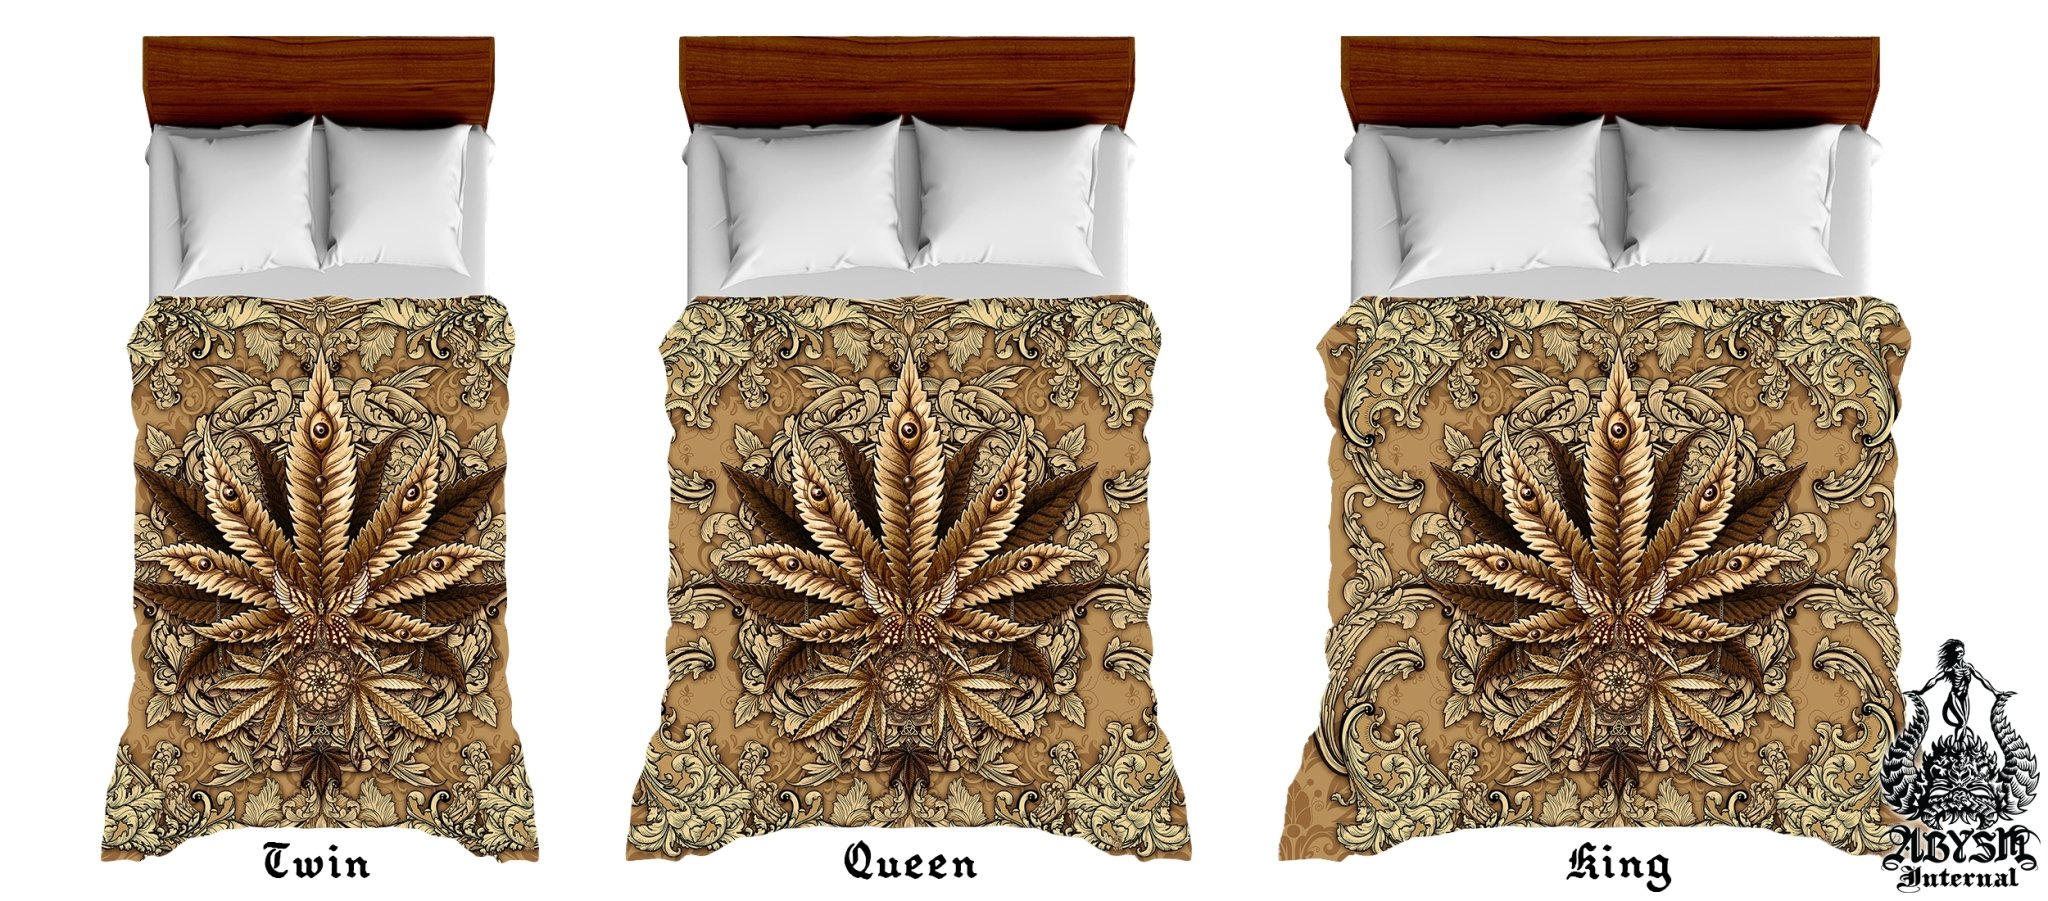 Weed Bedding Set, Comforter and Duvet, Cannabis Bed Cover, Marijuana Bedroom Decor, King, Queen and Twin Size, 420 Room Art - Cream - Abysm Internal